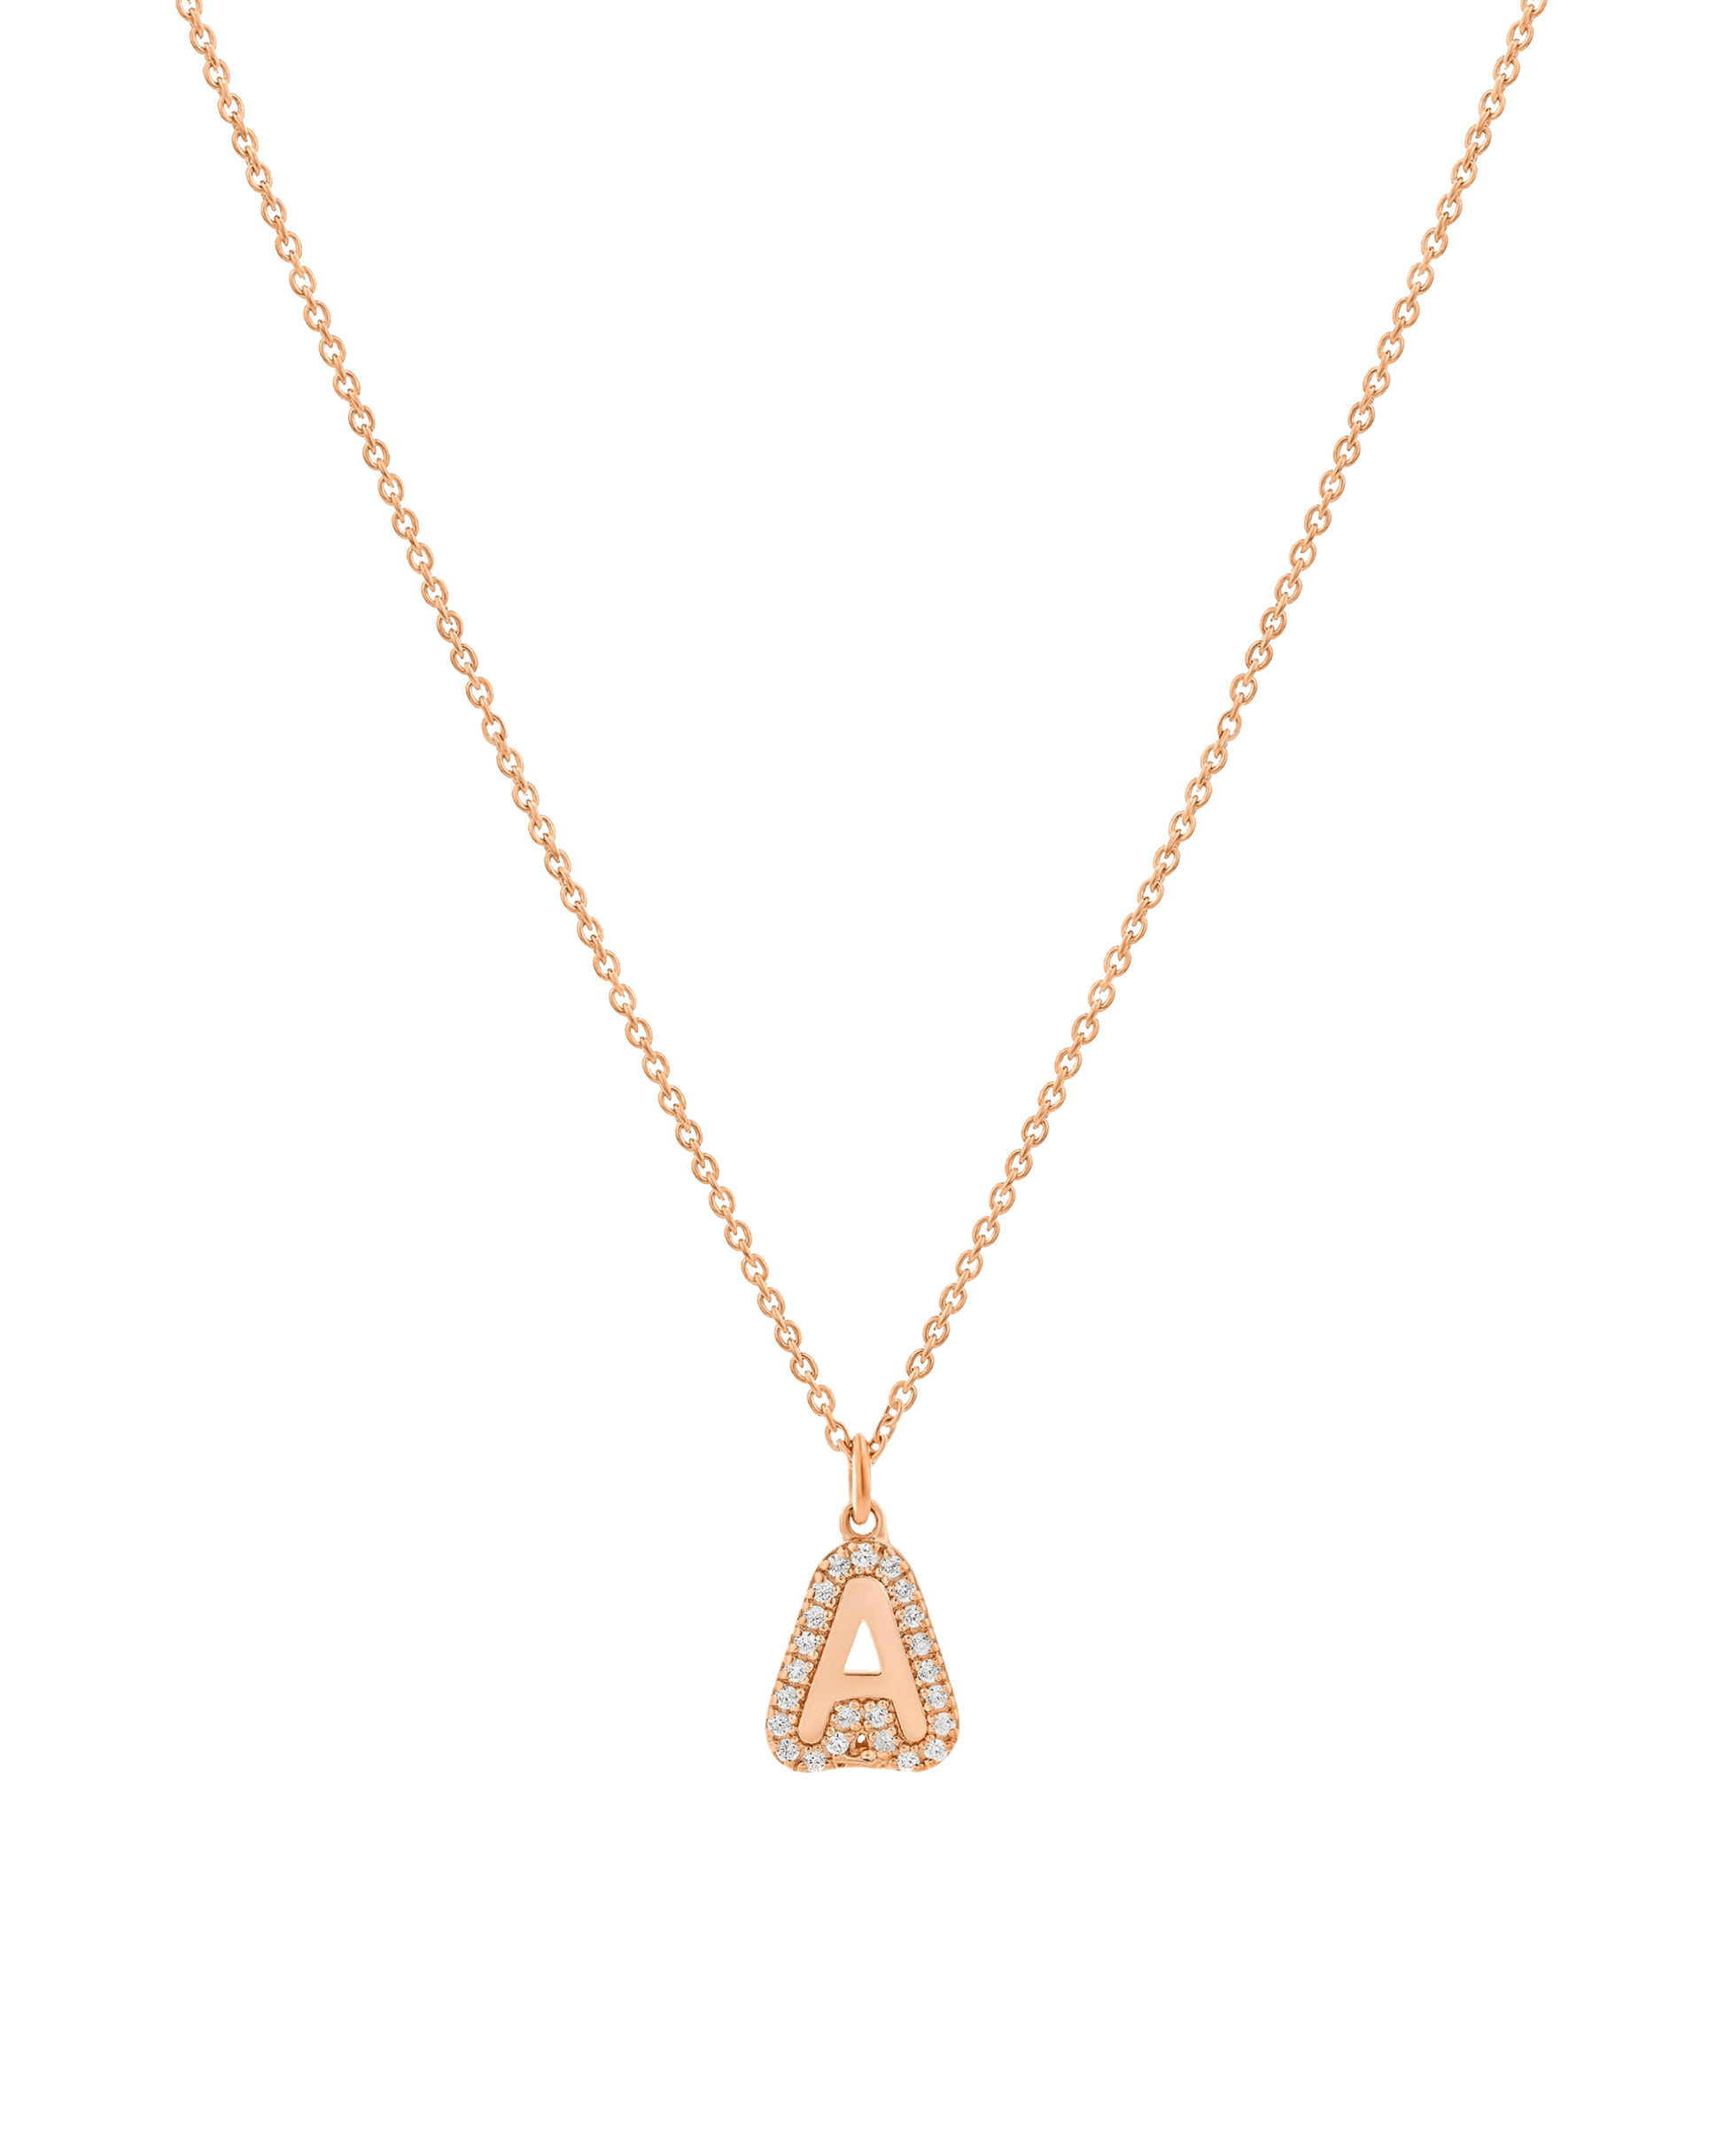 Diamond Bubble Initial Necklace - 14K Rose Gold Necklaces 14K Solid Gold Adjustable 16-17" (40cm-43cm) 